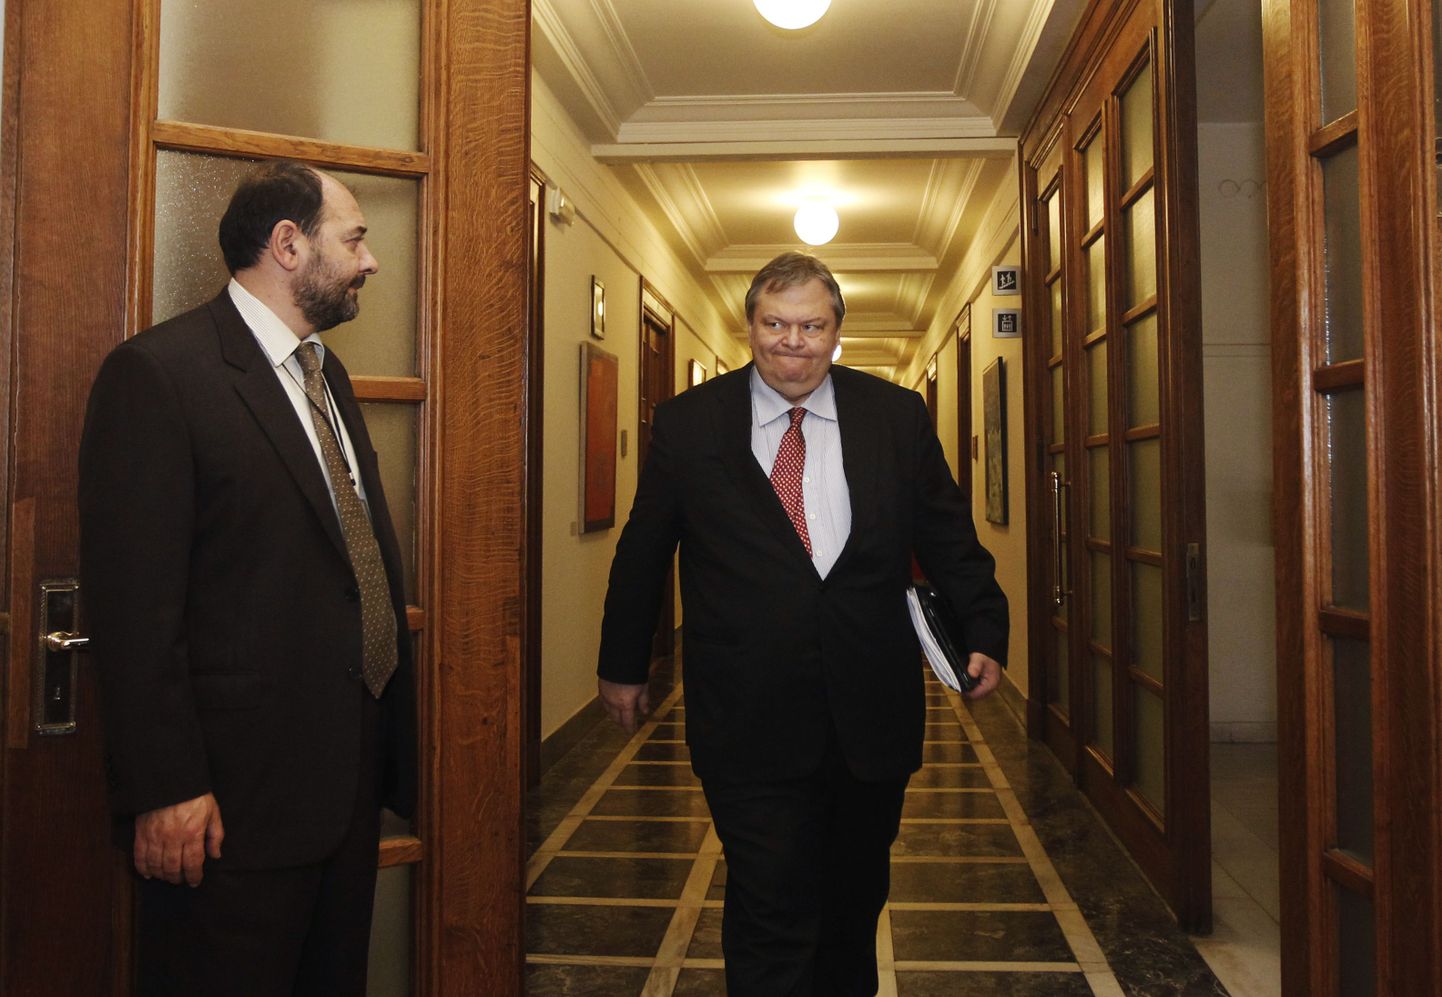 Kreeka rahandusminister Evangelos Venizelos (paremal).